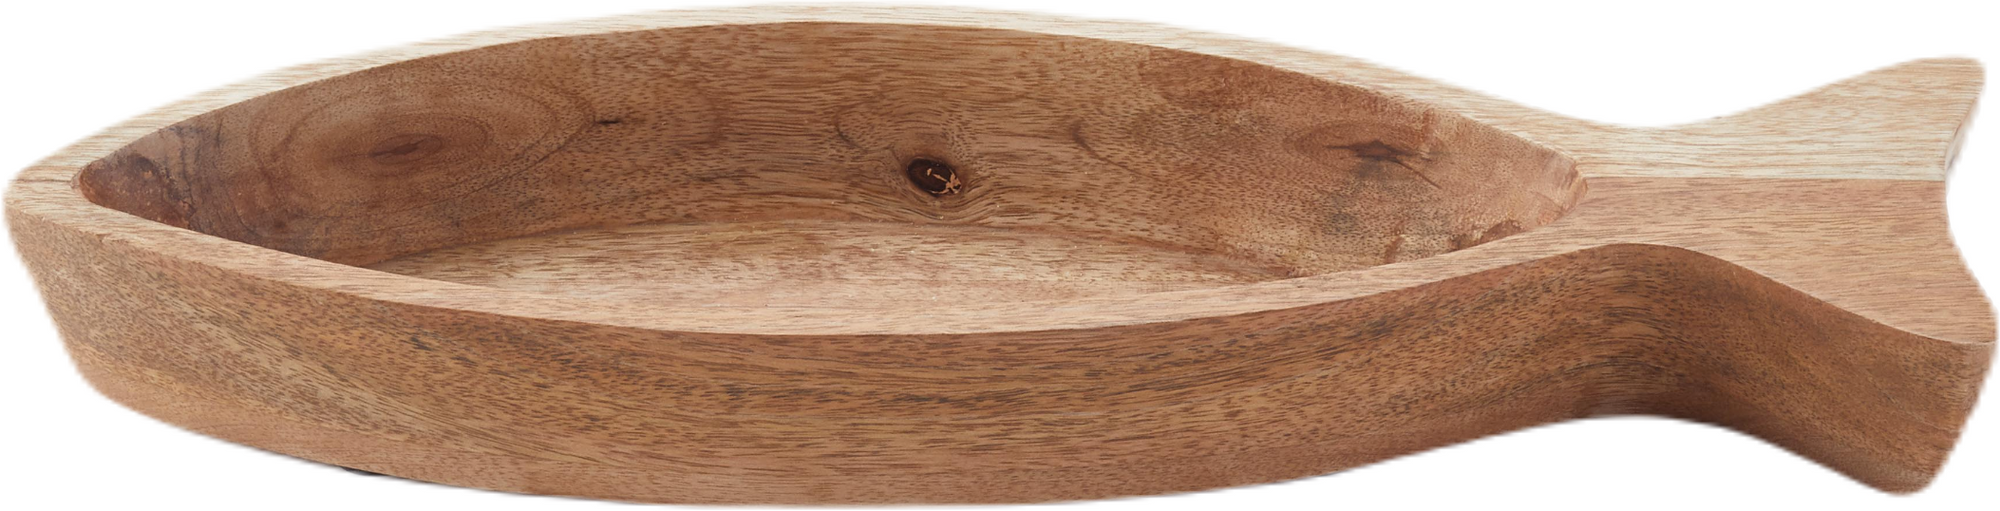 Natural Wood Fish Bowl Medium